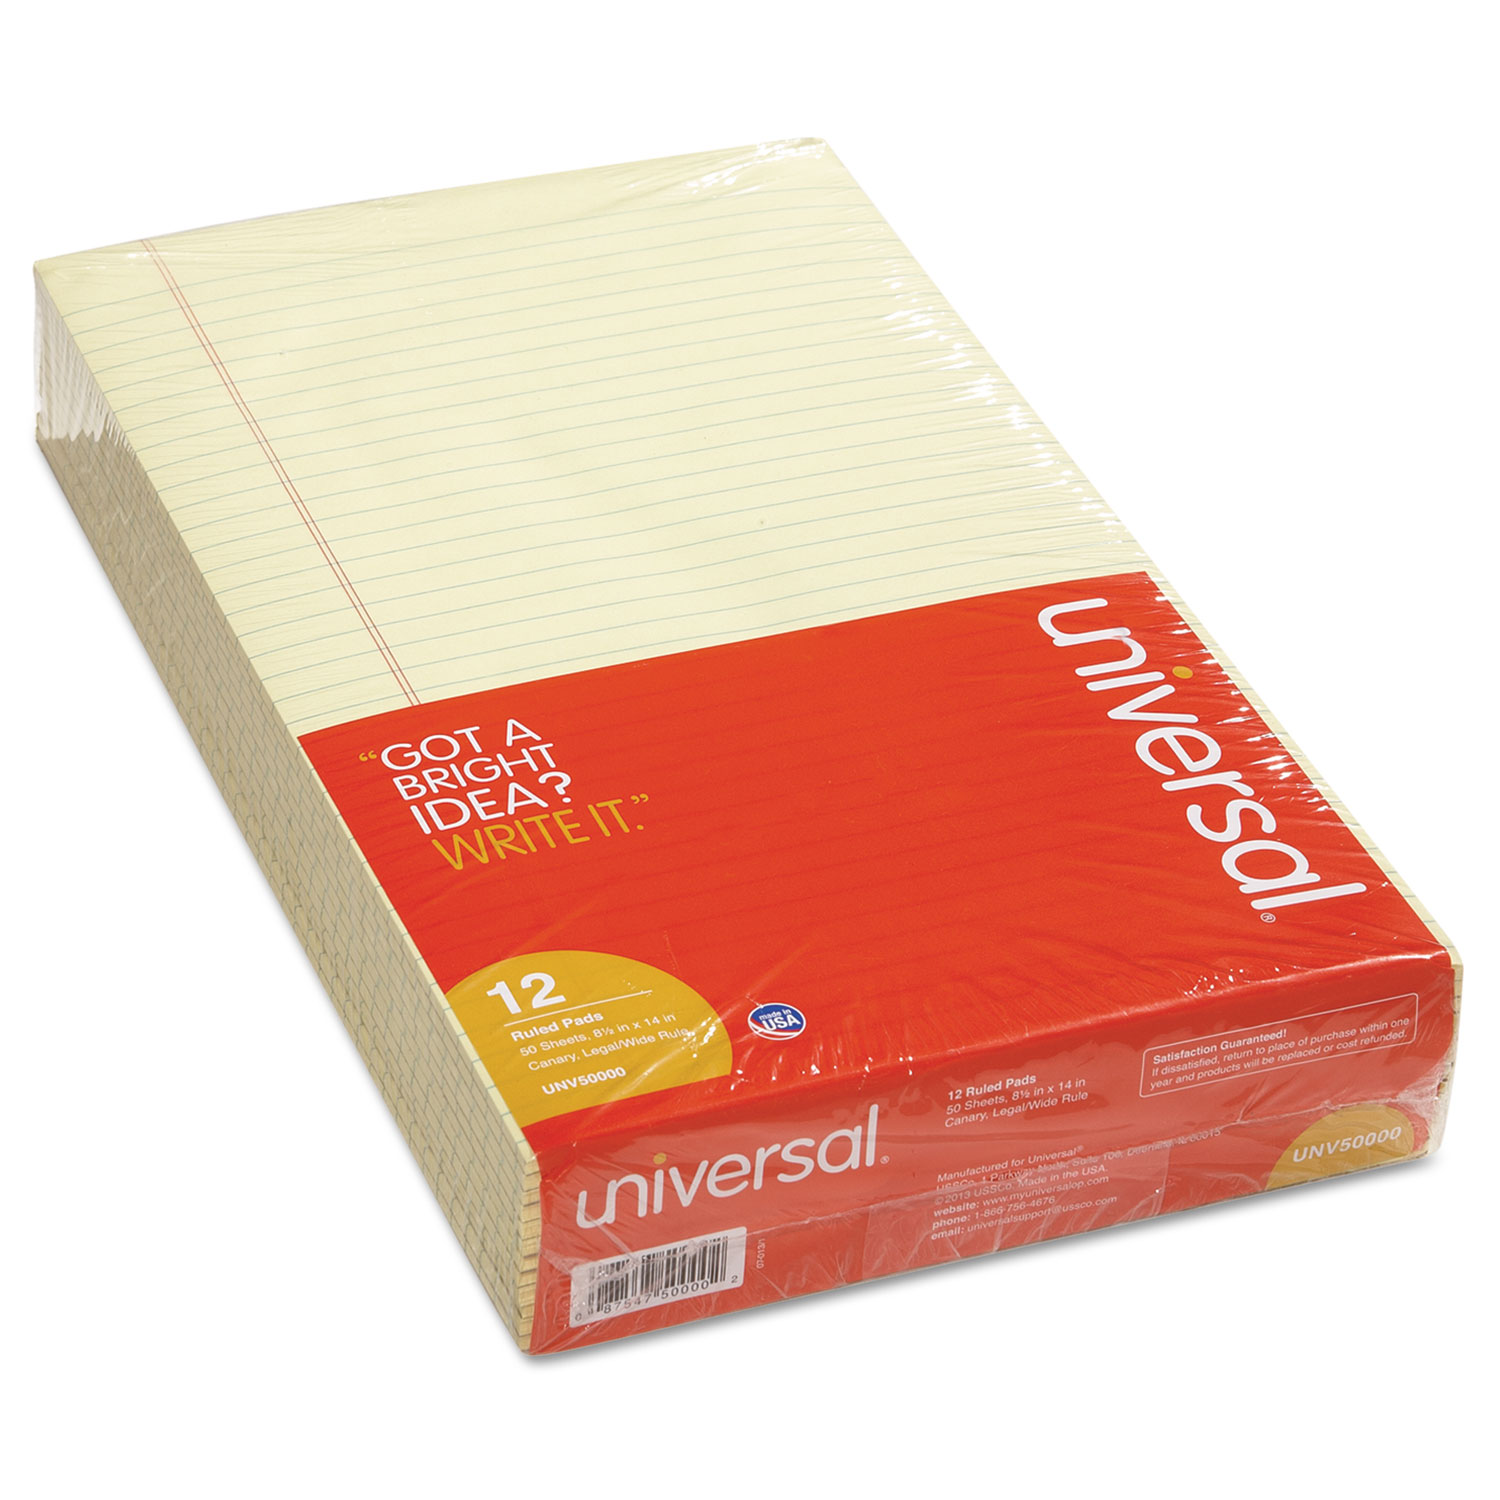  Universal UNV50000 Glue Top Pads, Wide/Legal Rule, 8.5 x 14, Canary, 50 Sheets, Dozen (UNV50000) 